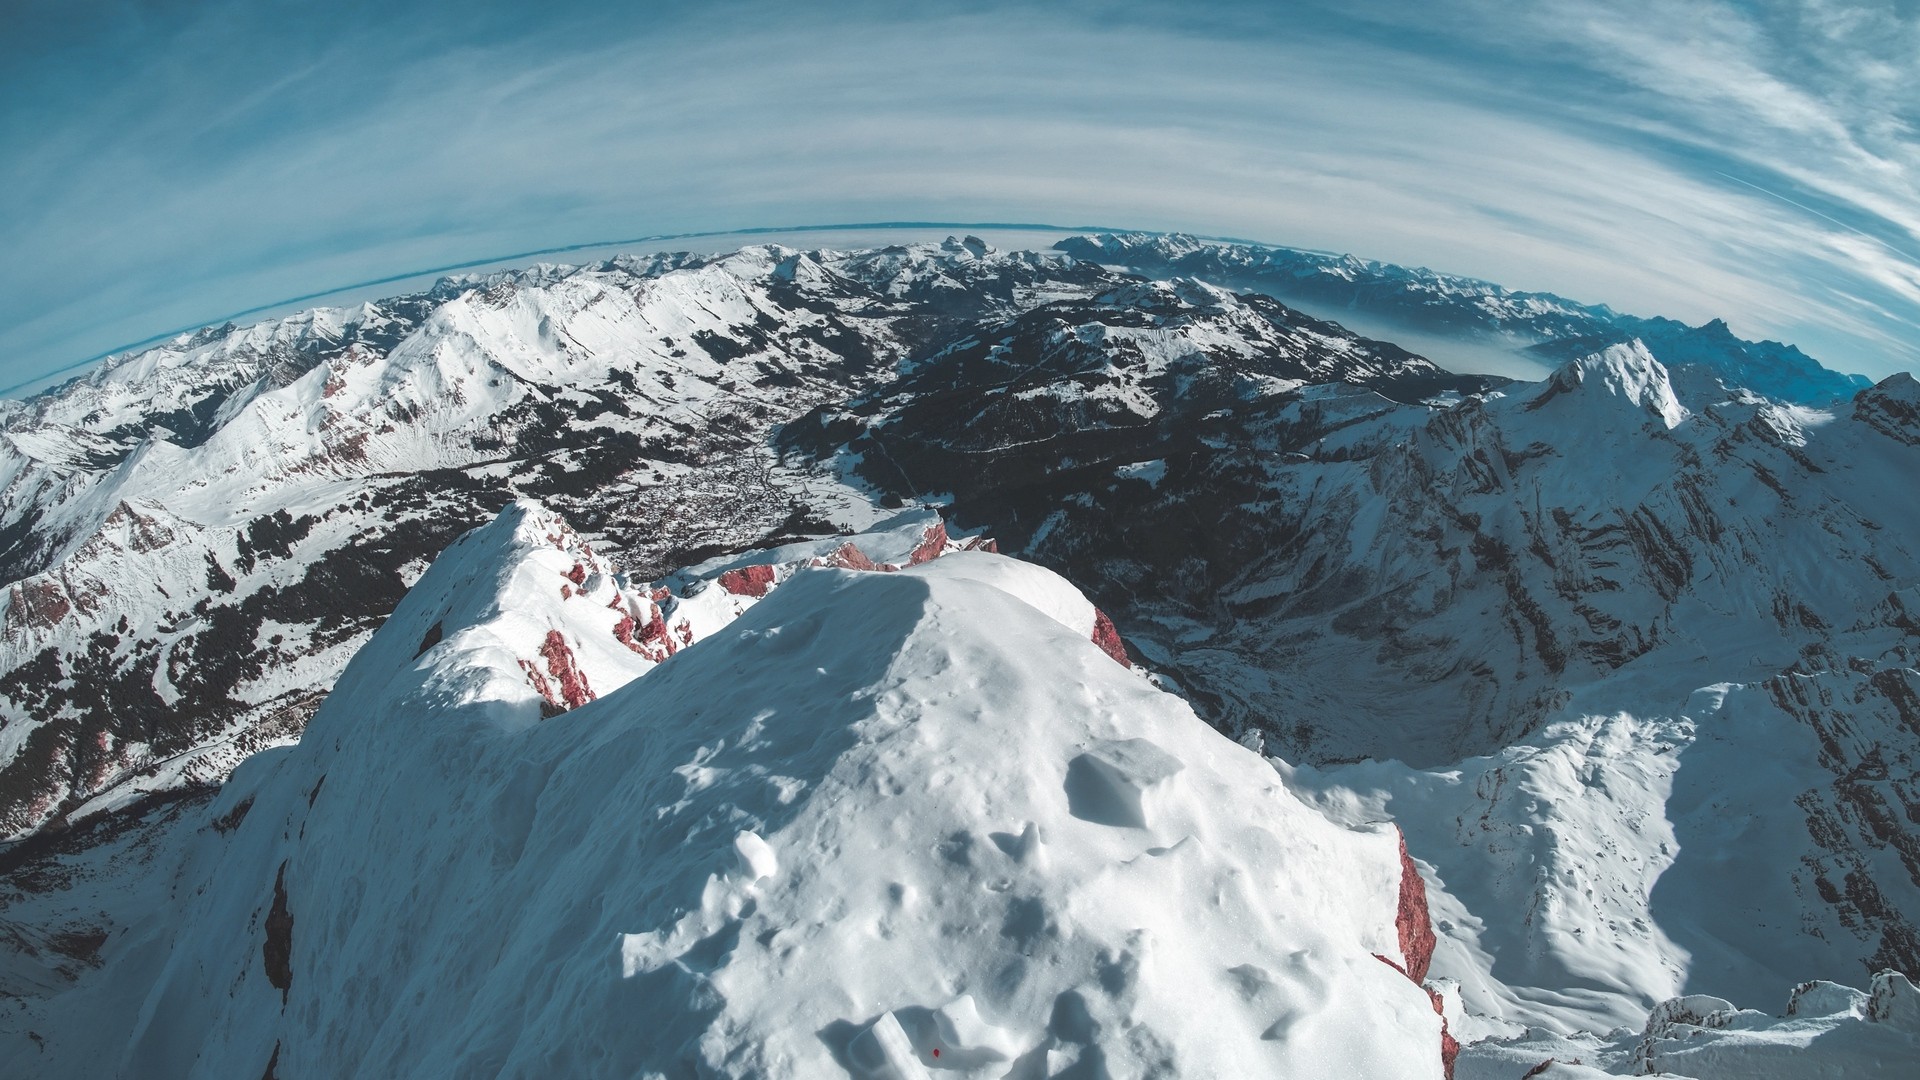 1920x1080 wallpapers: mountains, snow, winter, peak (image)